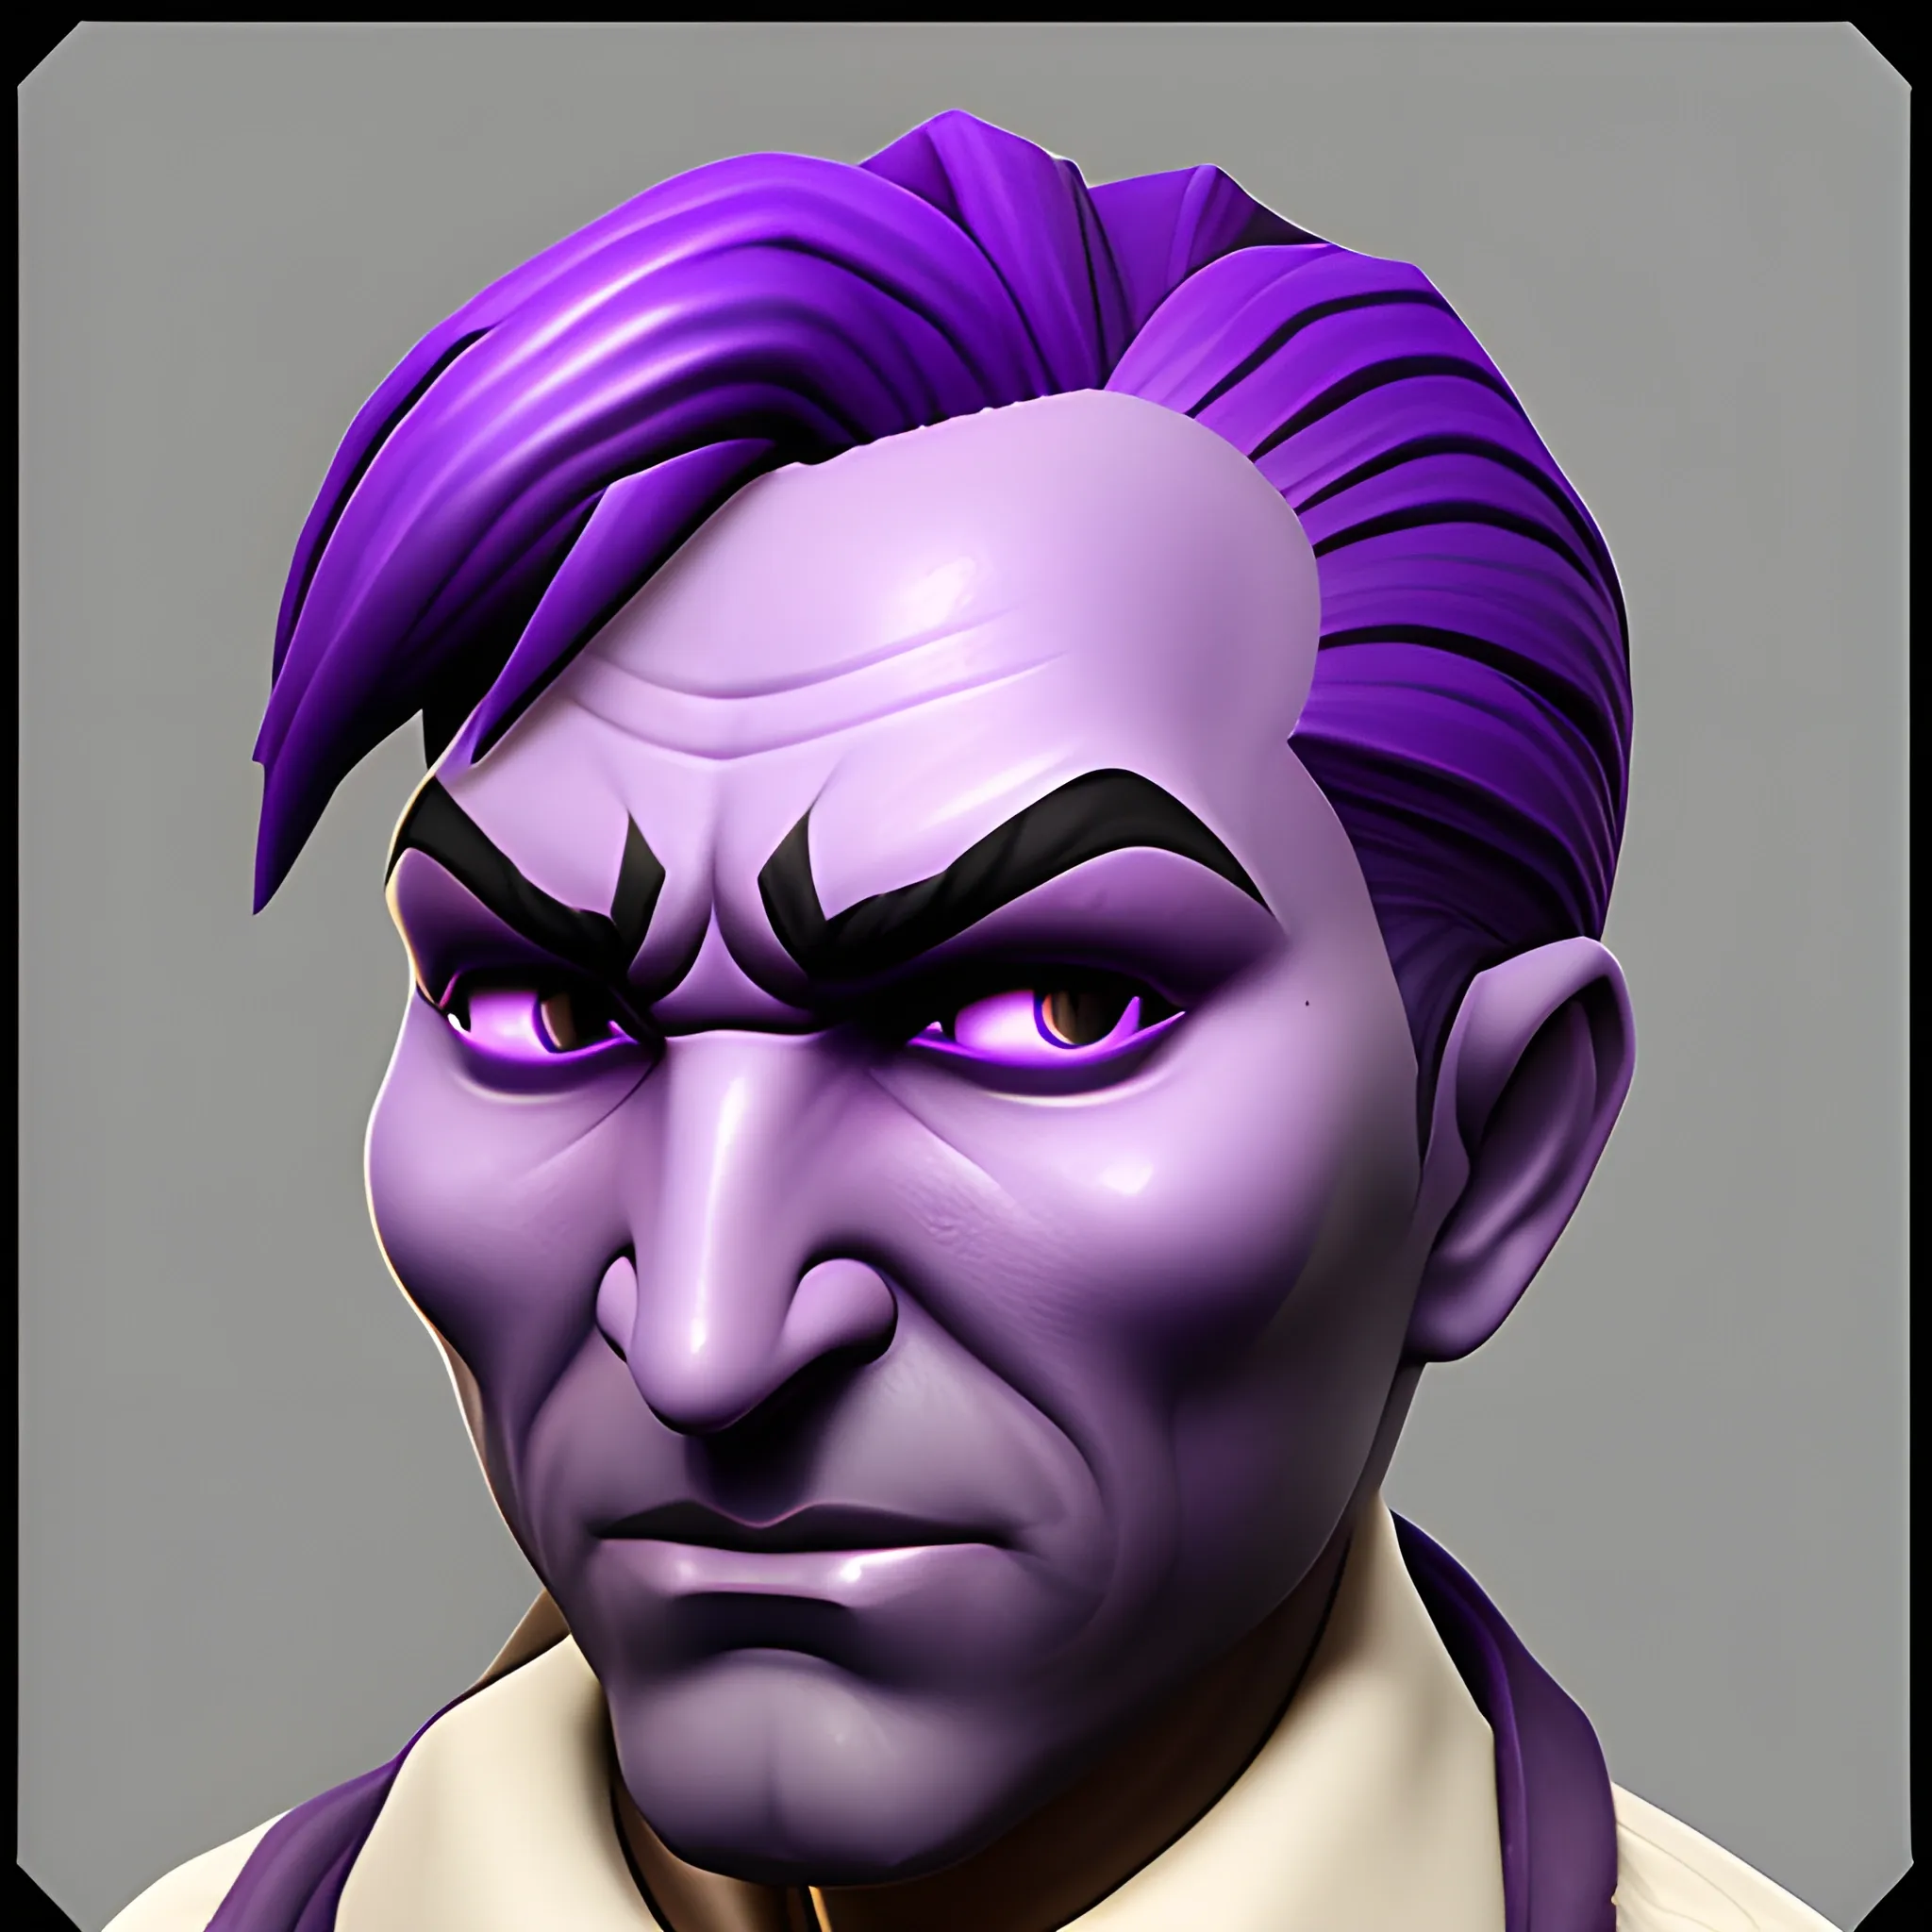 game emote
purple